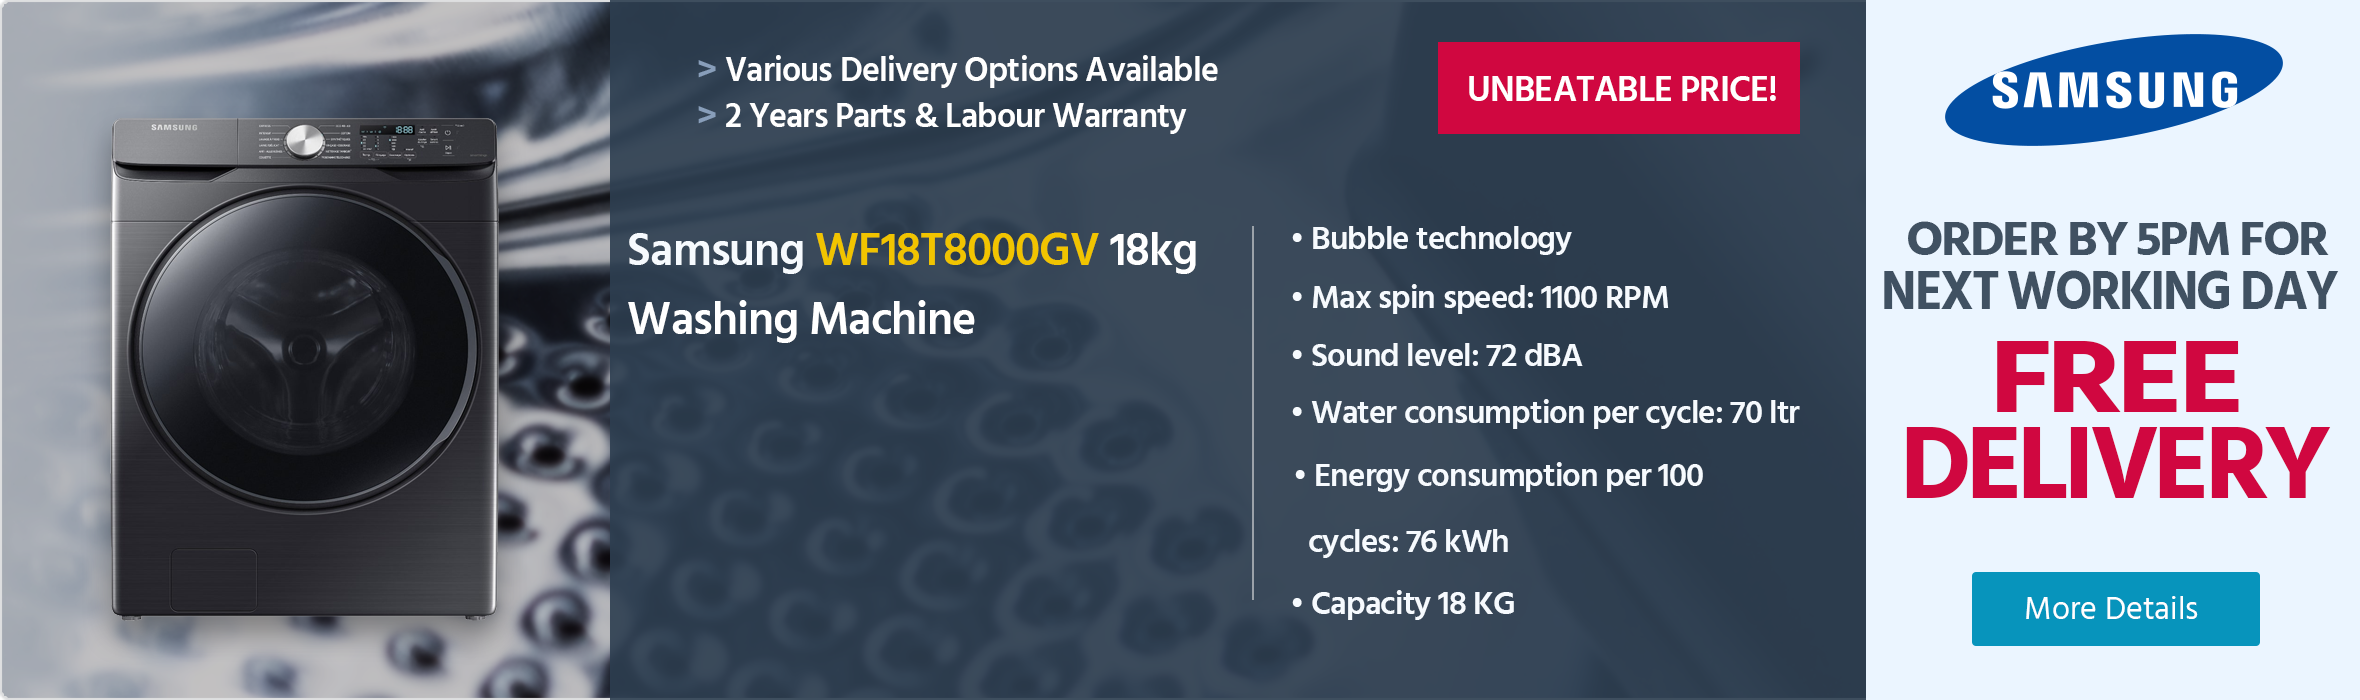 Samsung WF18T8000GV 18kg Washing Machine